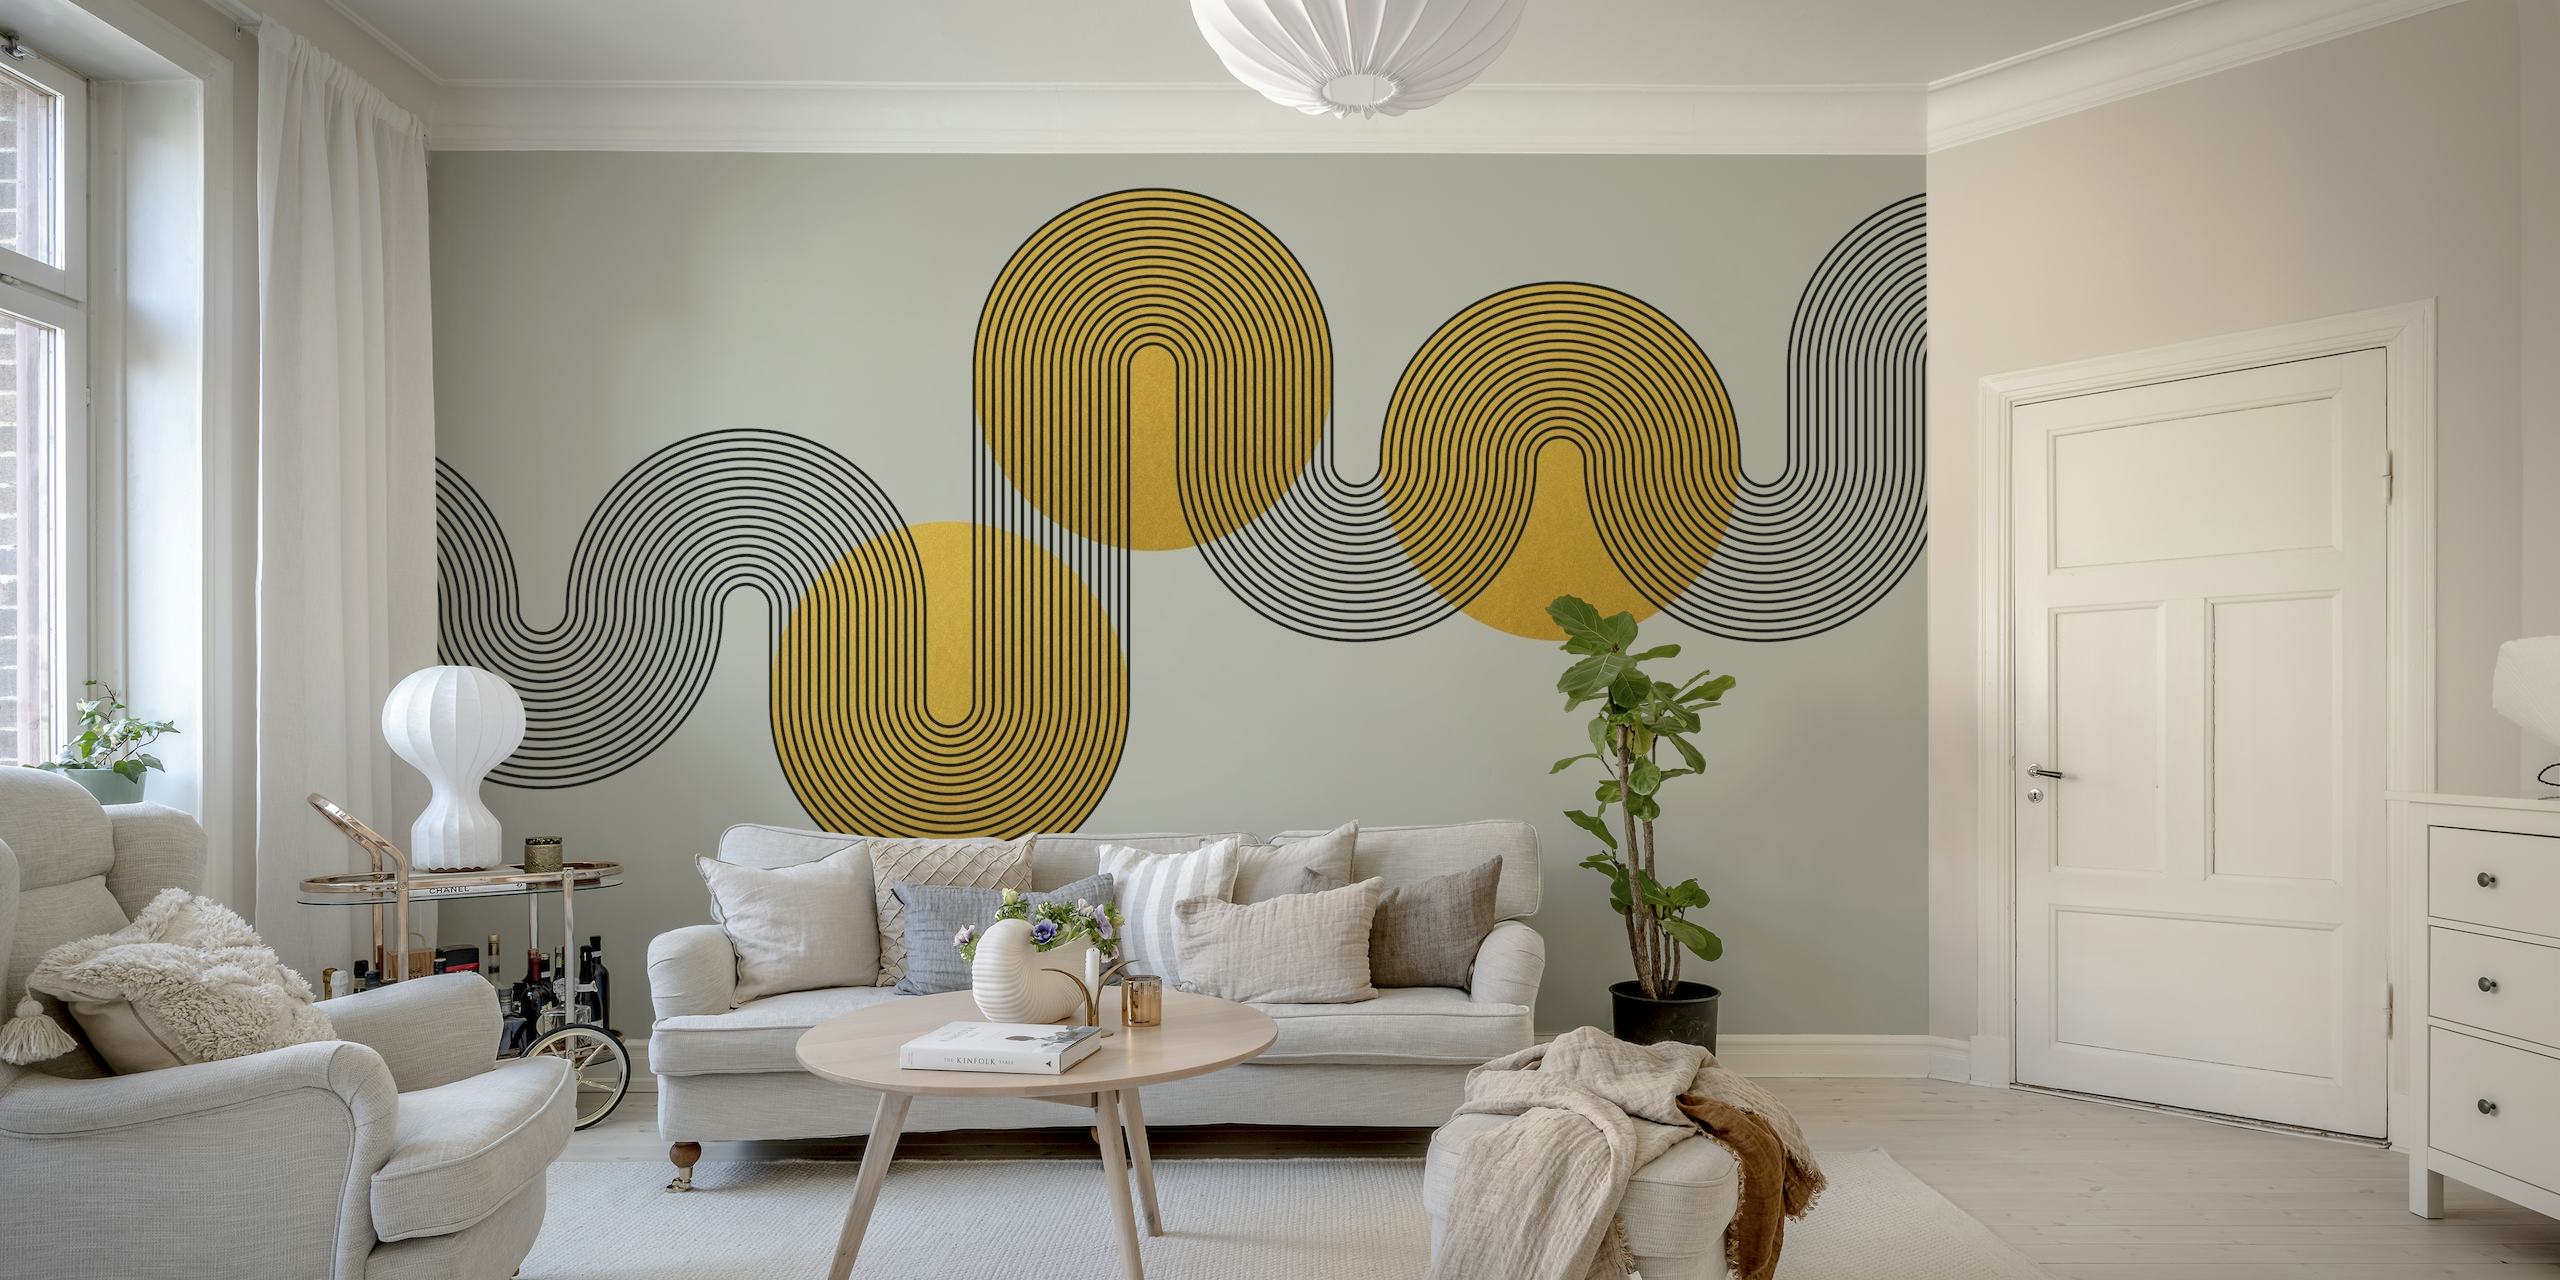 Abstrakt vægmaleri i art deco-stil med geometriske former i guld og grå toner